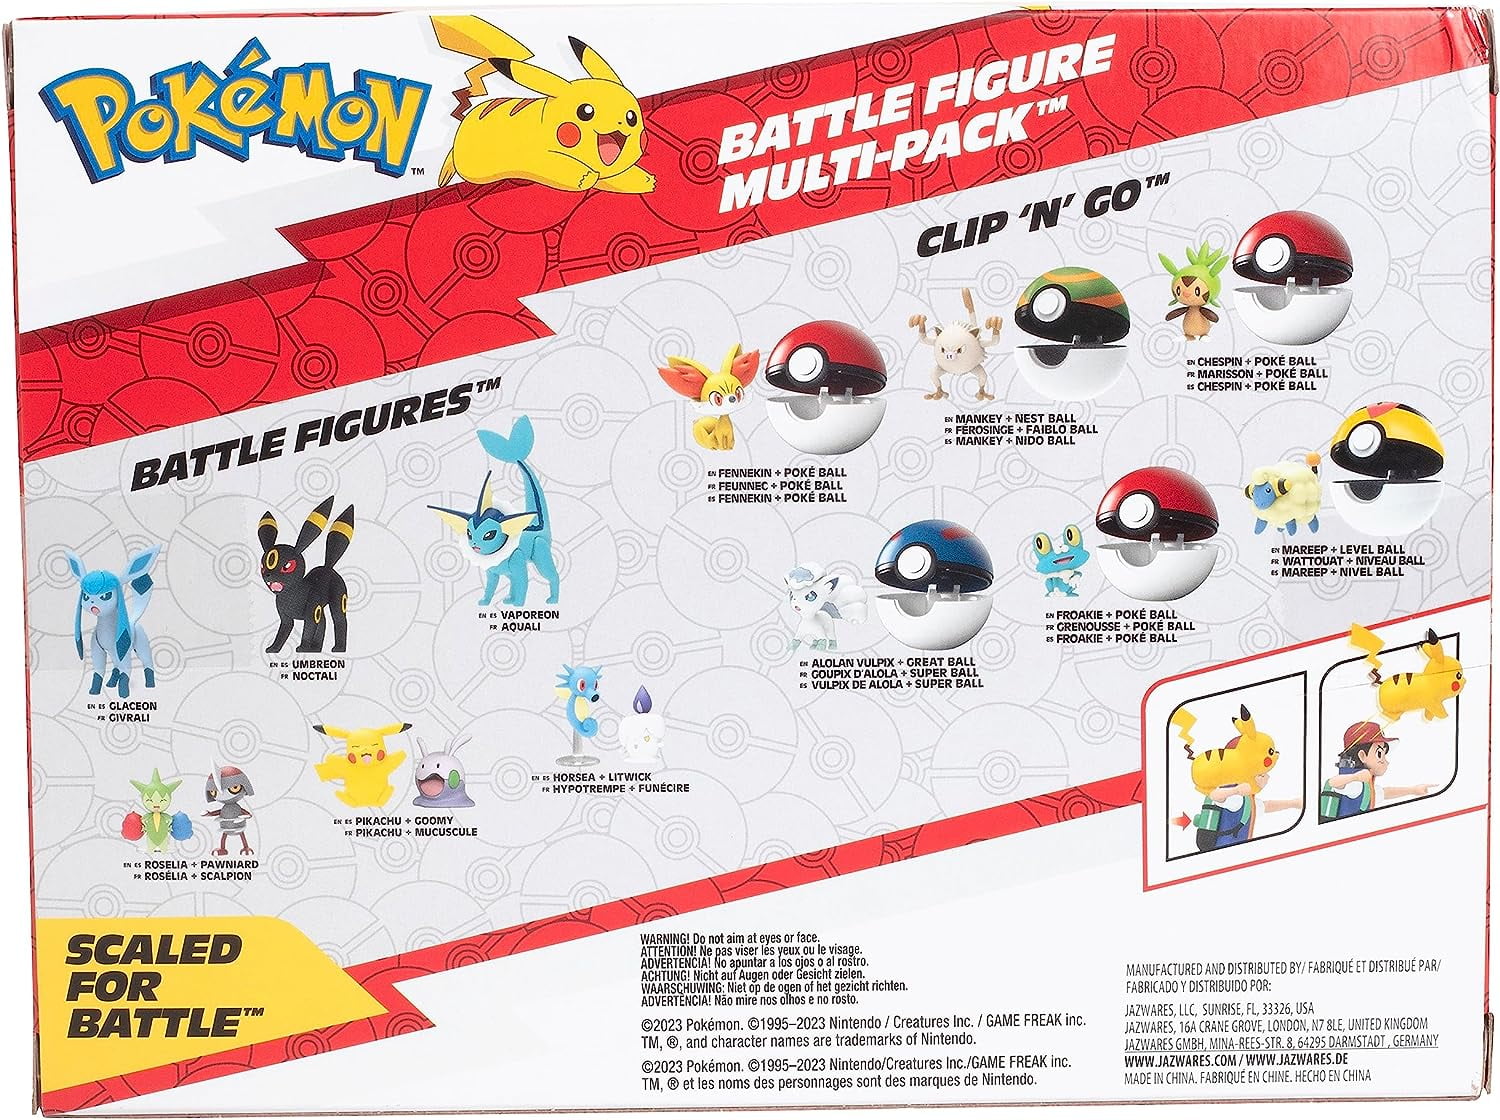 Jazwares Pokémon Battle Figure Toy Set - 6 Piece Playset - Includes 2 Pichu, Yamper, Turtwig, Piplup, Chimchar & Deino - Generation 4 Diamond & Pearl